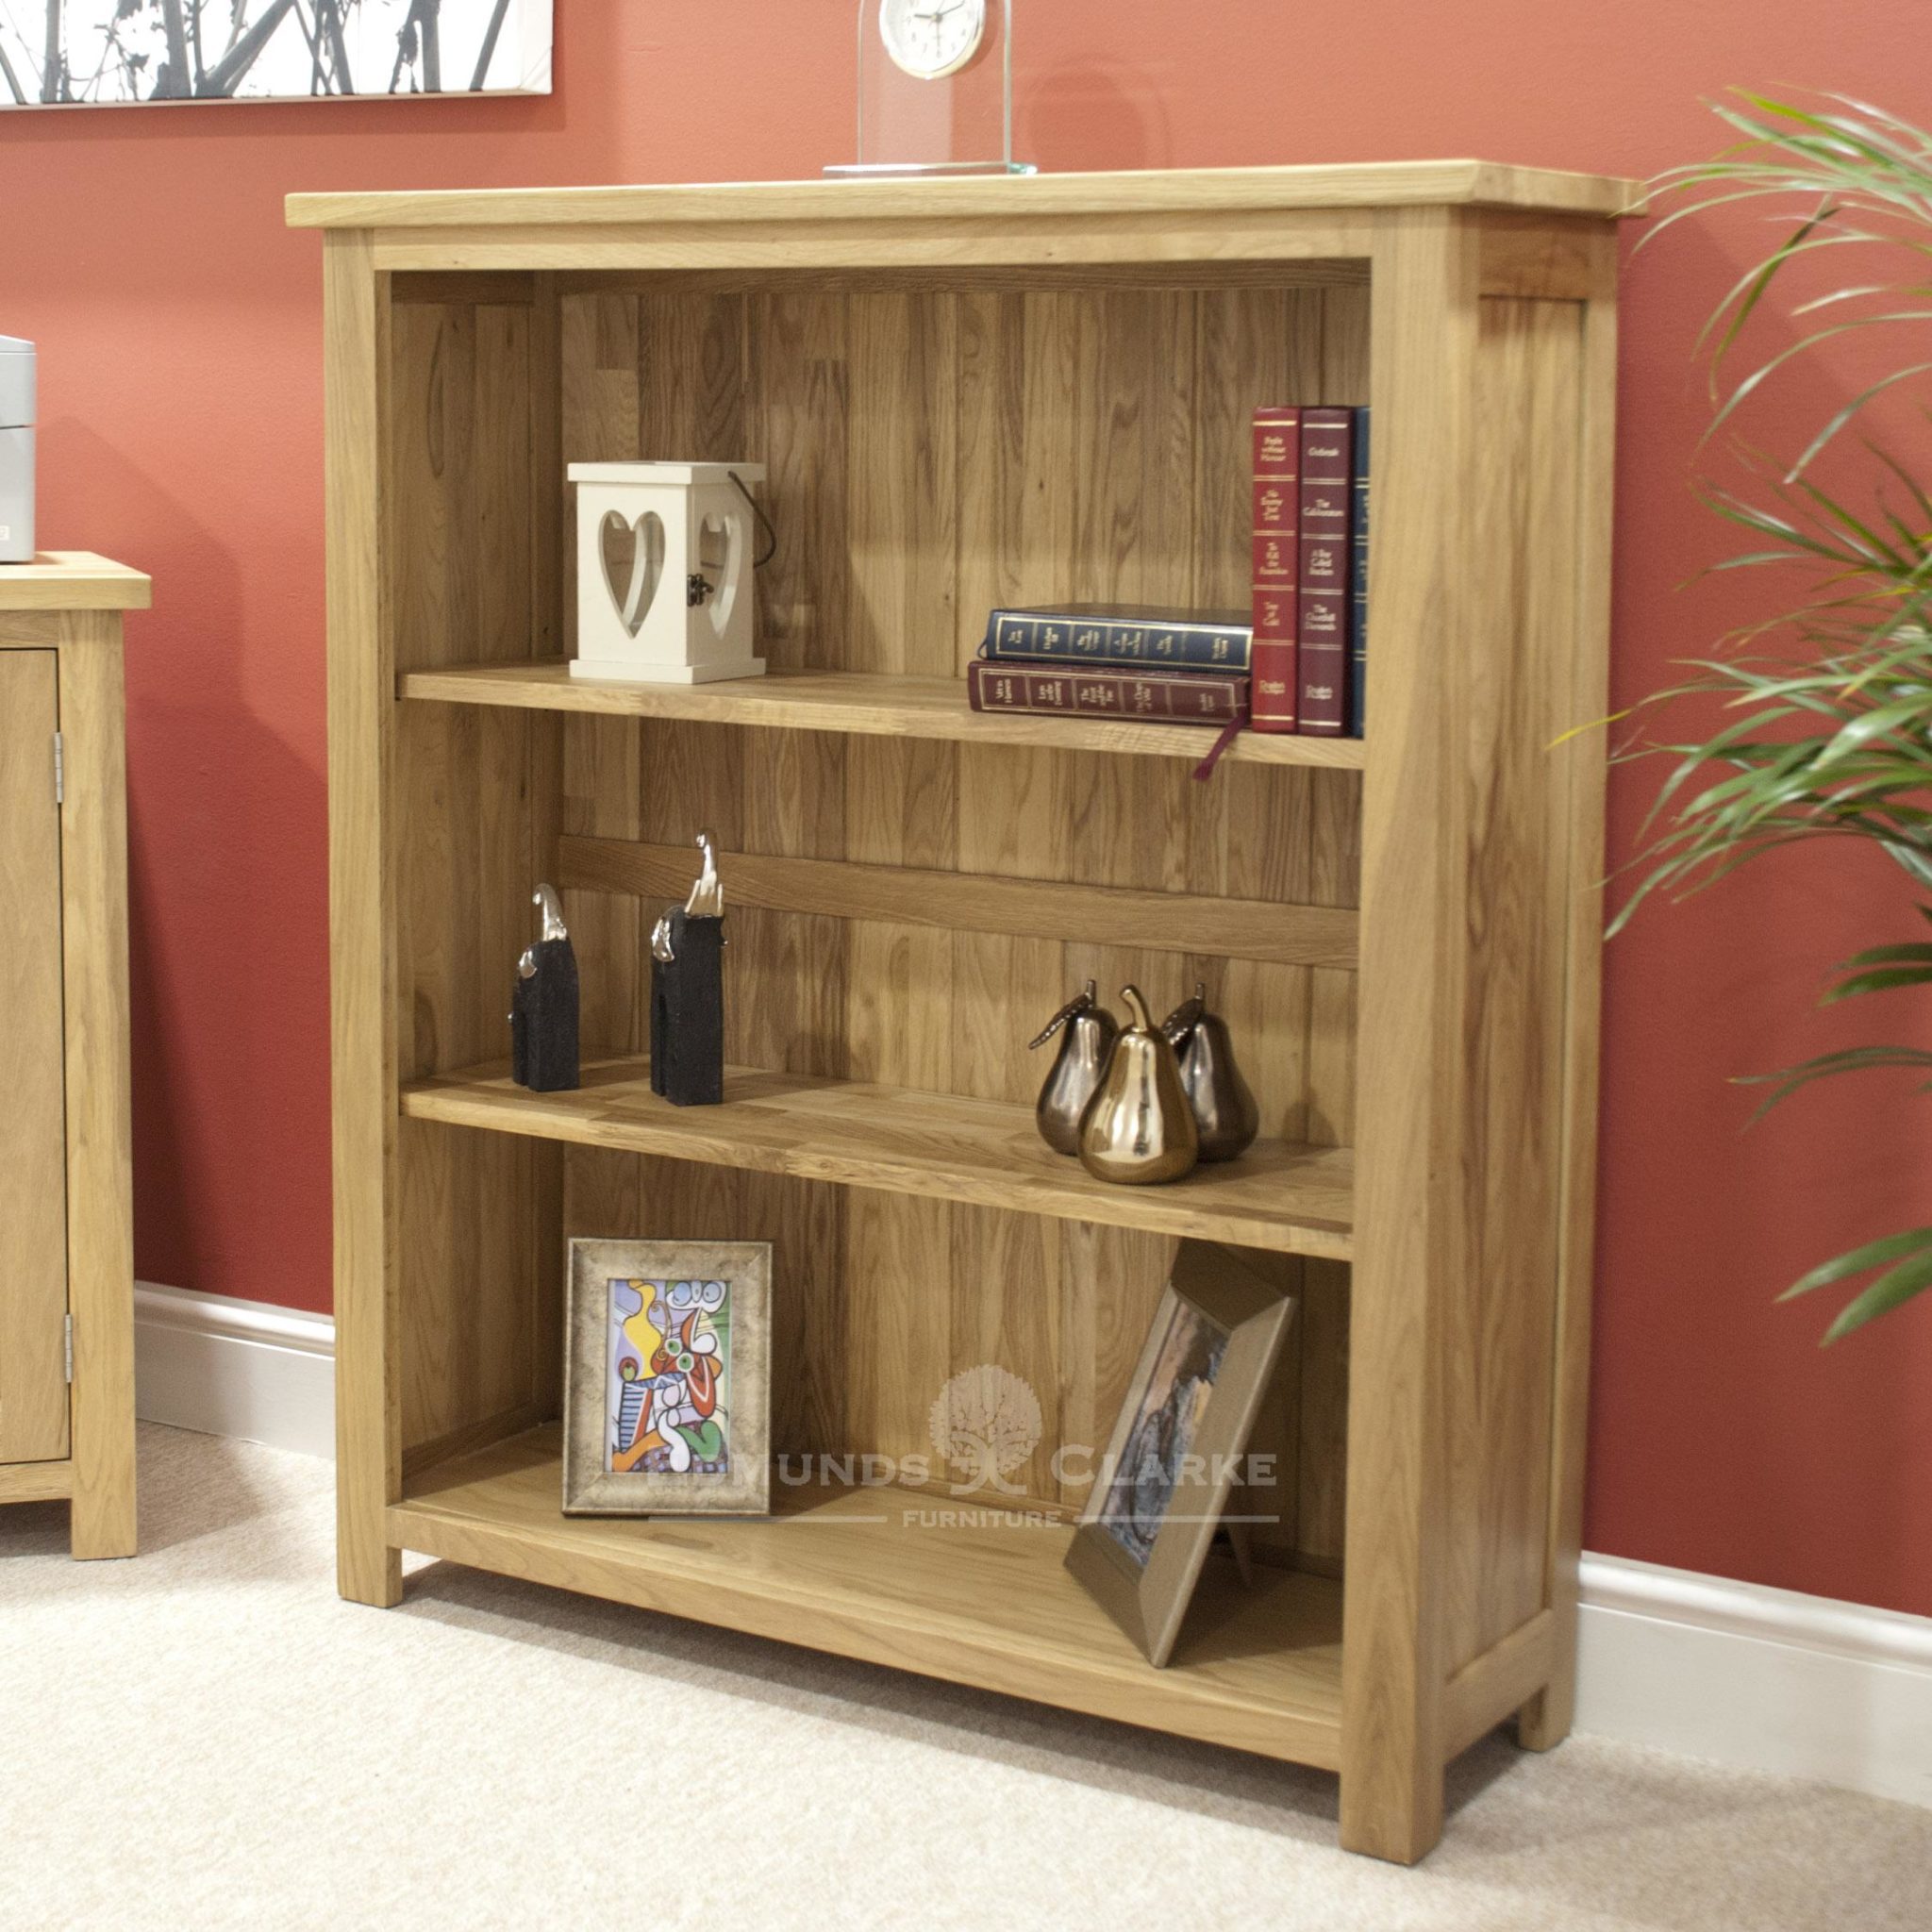 Bury Small Oak Bookcase Edmunds, Oak Bookcases With Adjustable Shelves